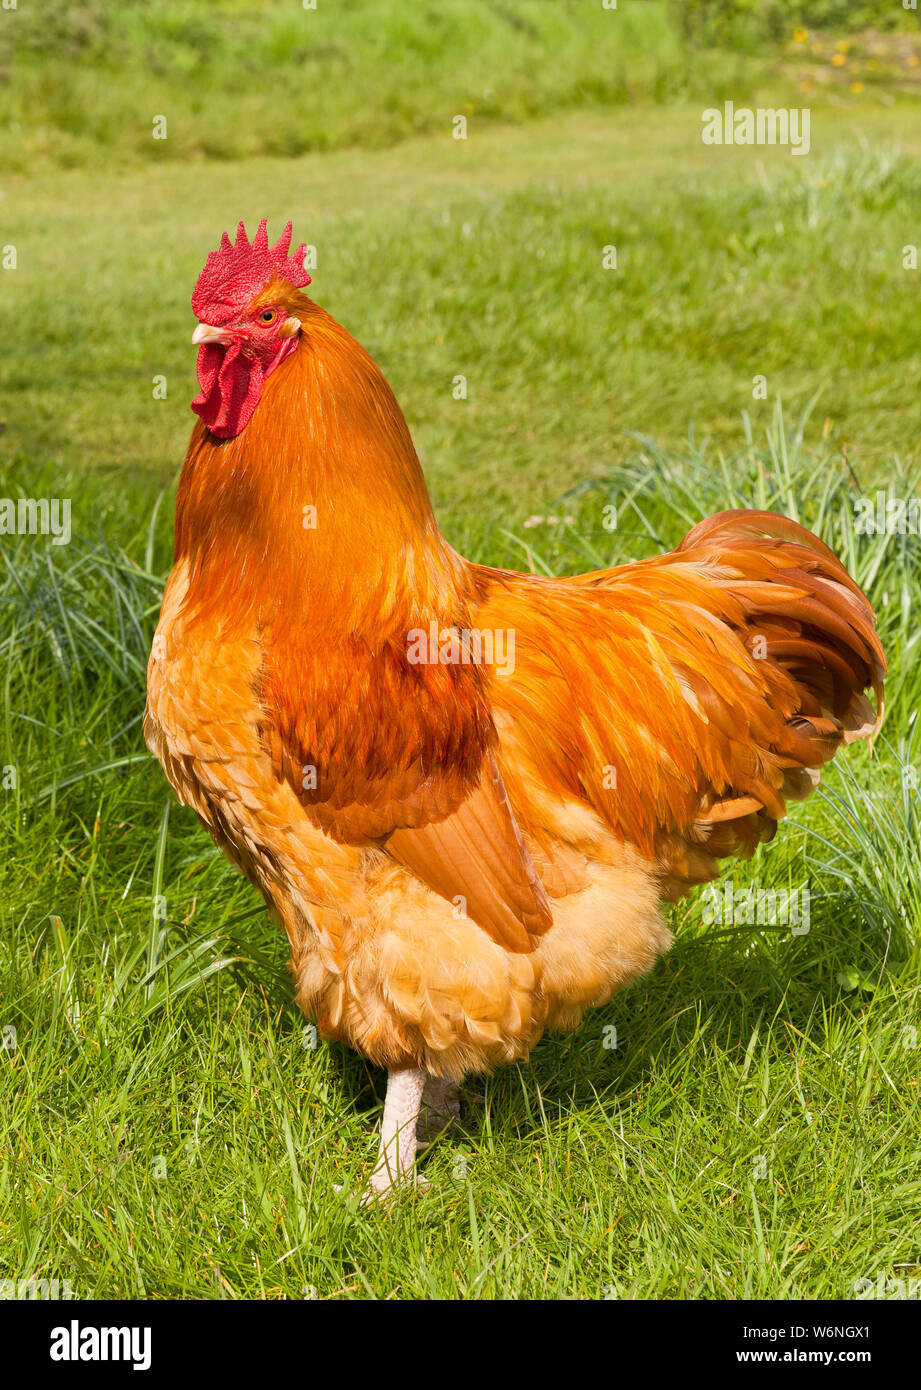 Orpington hühner -Fotos und -Bildmaterial in hoher Auflösung – Alamy